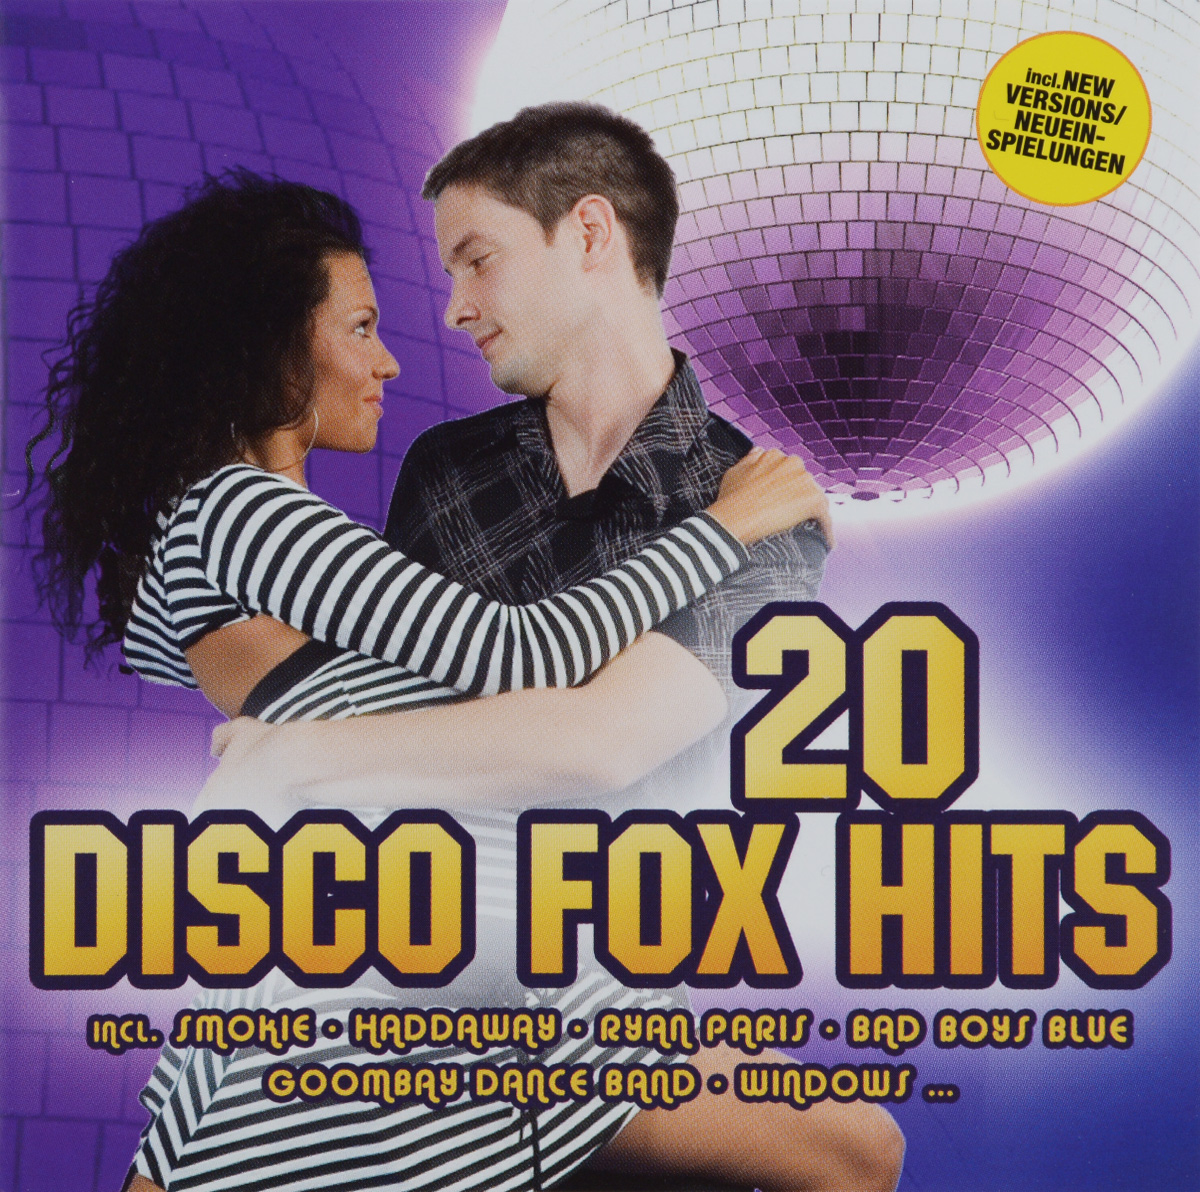 20 Disco Fox Hits